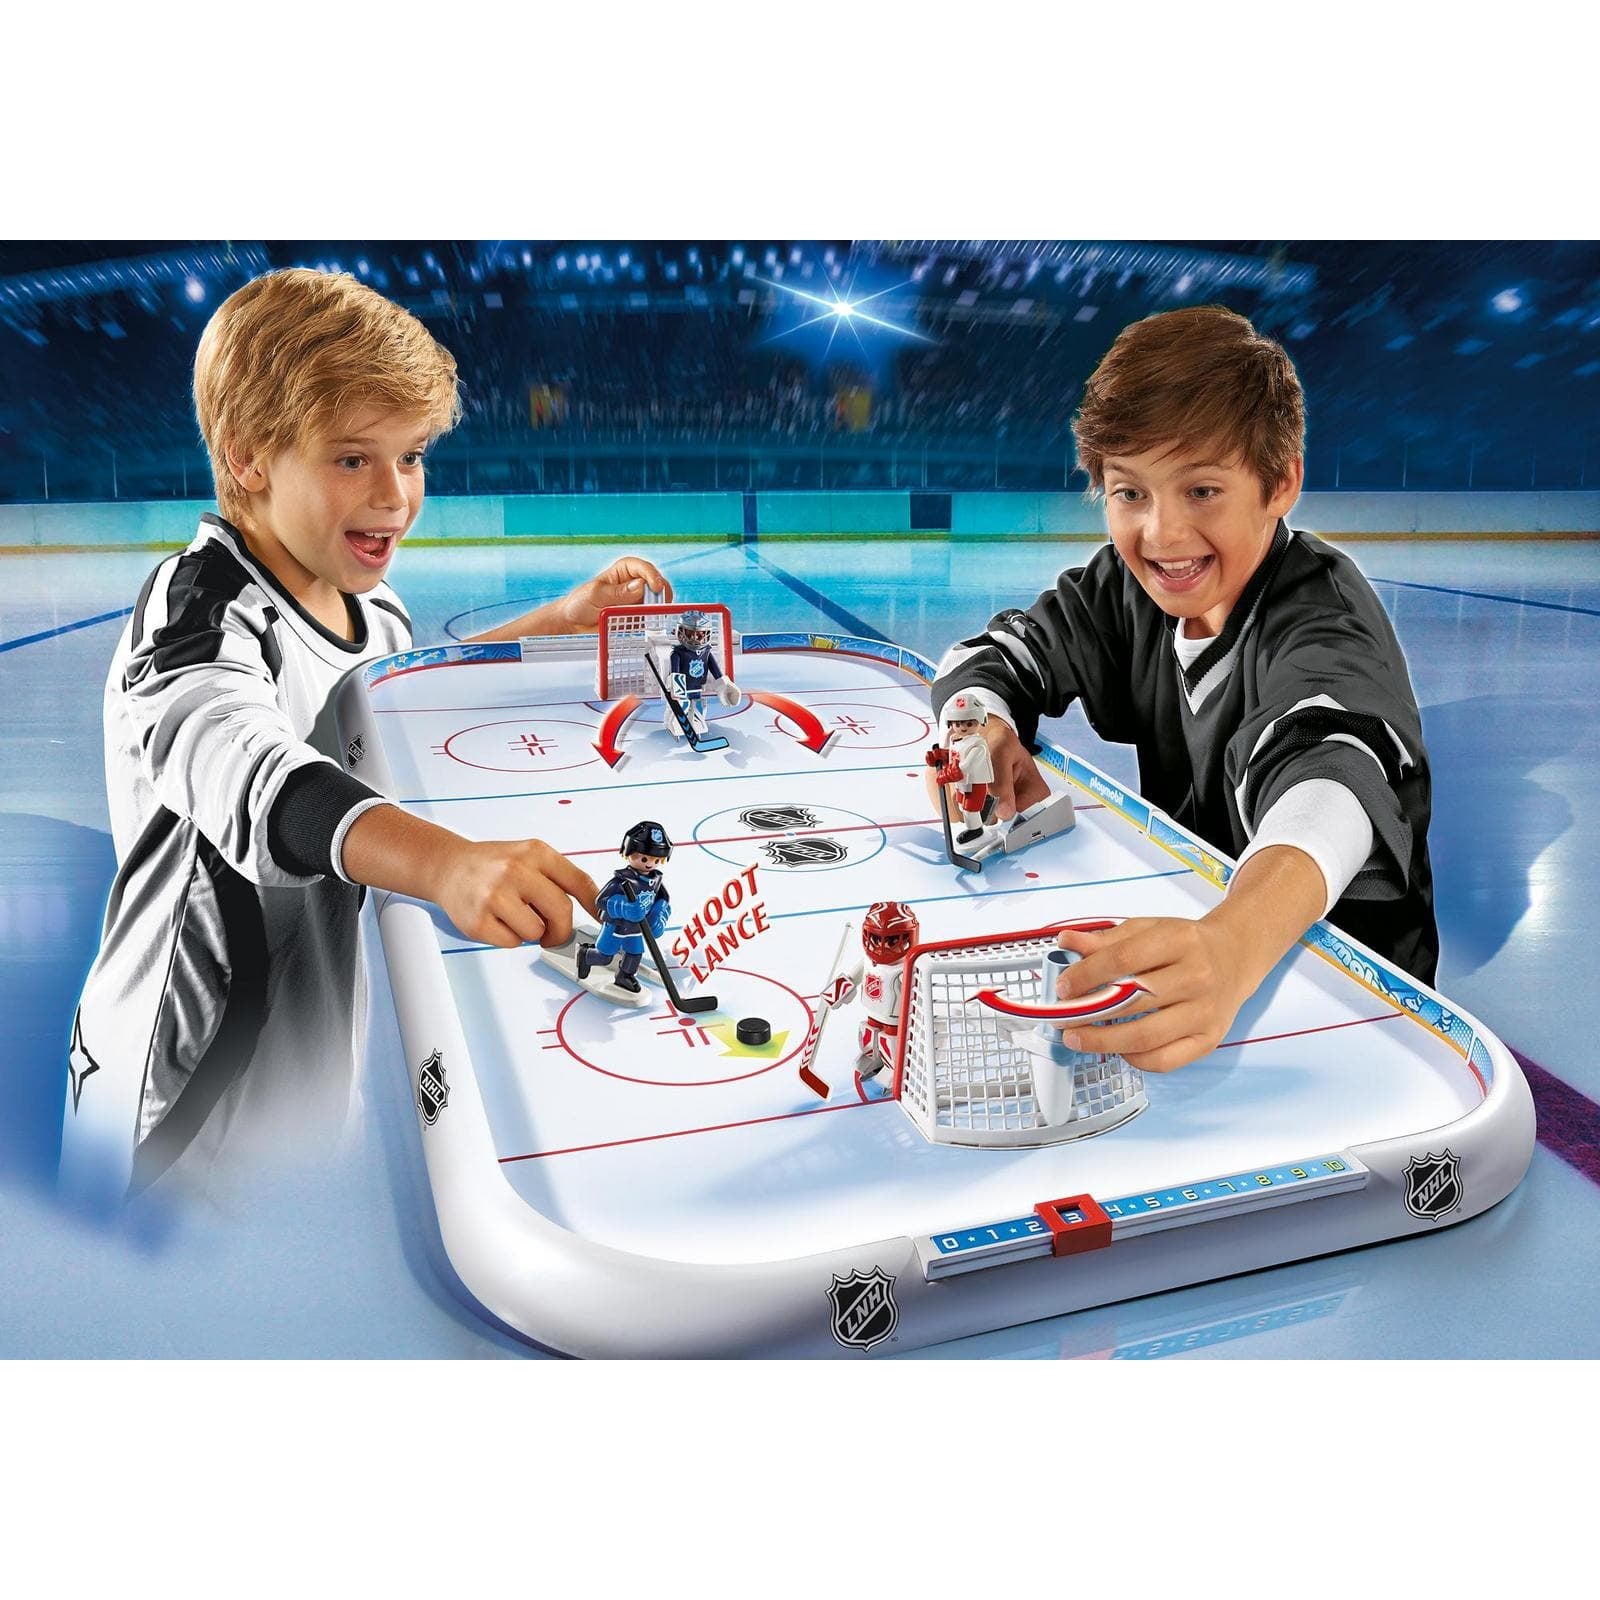 Playmobil-NHL - Hockey Arena-5068-Legacy Toys